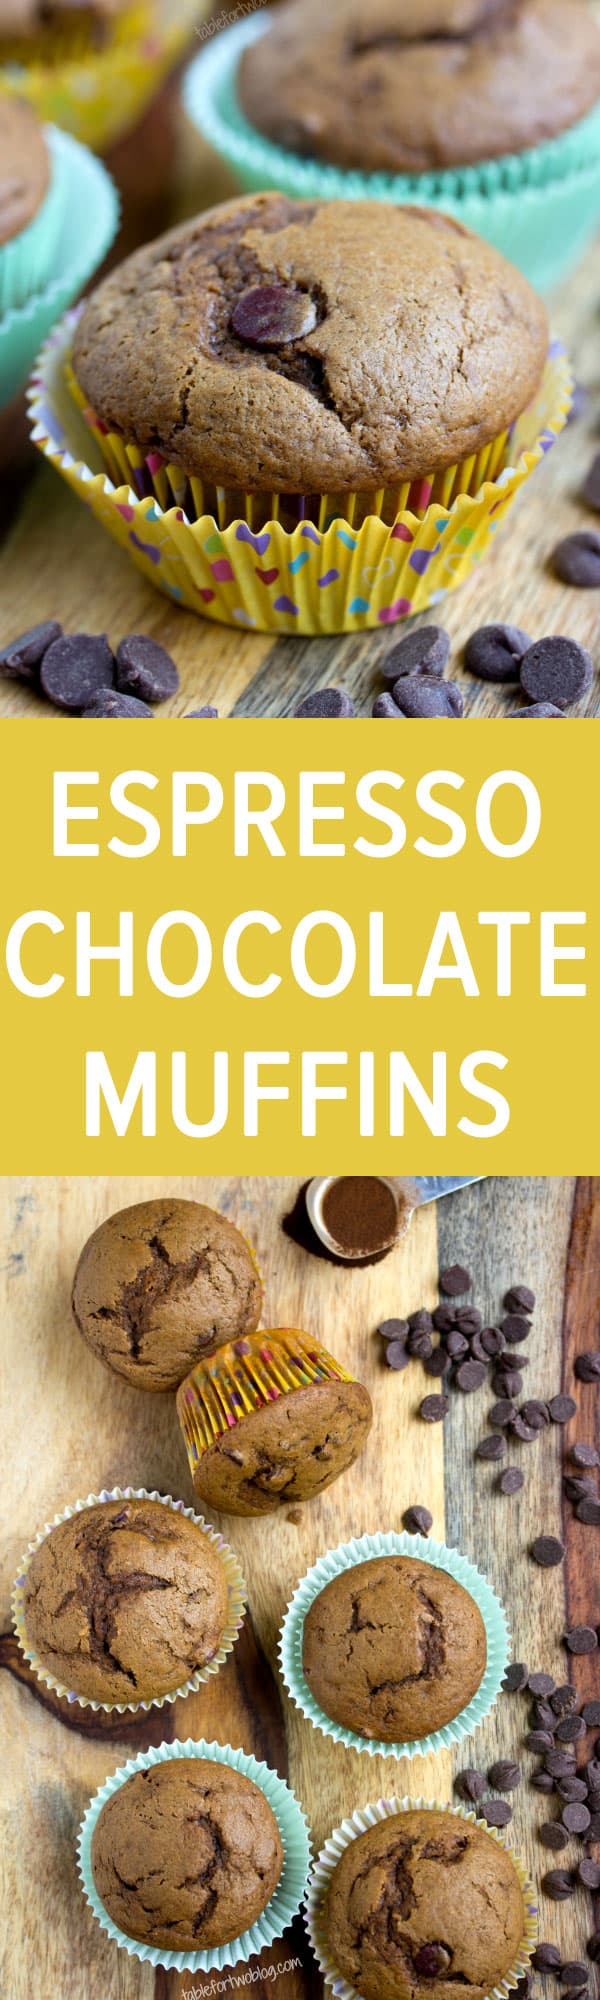 Espresso Chocolate Chip Muffins from www.tablefortwoblog.com